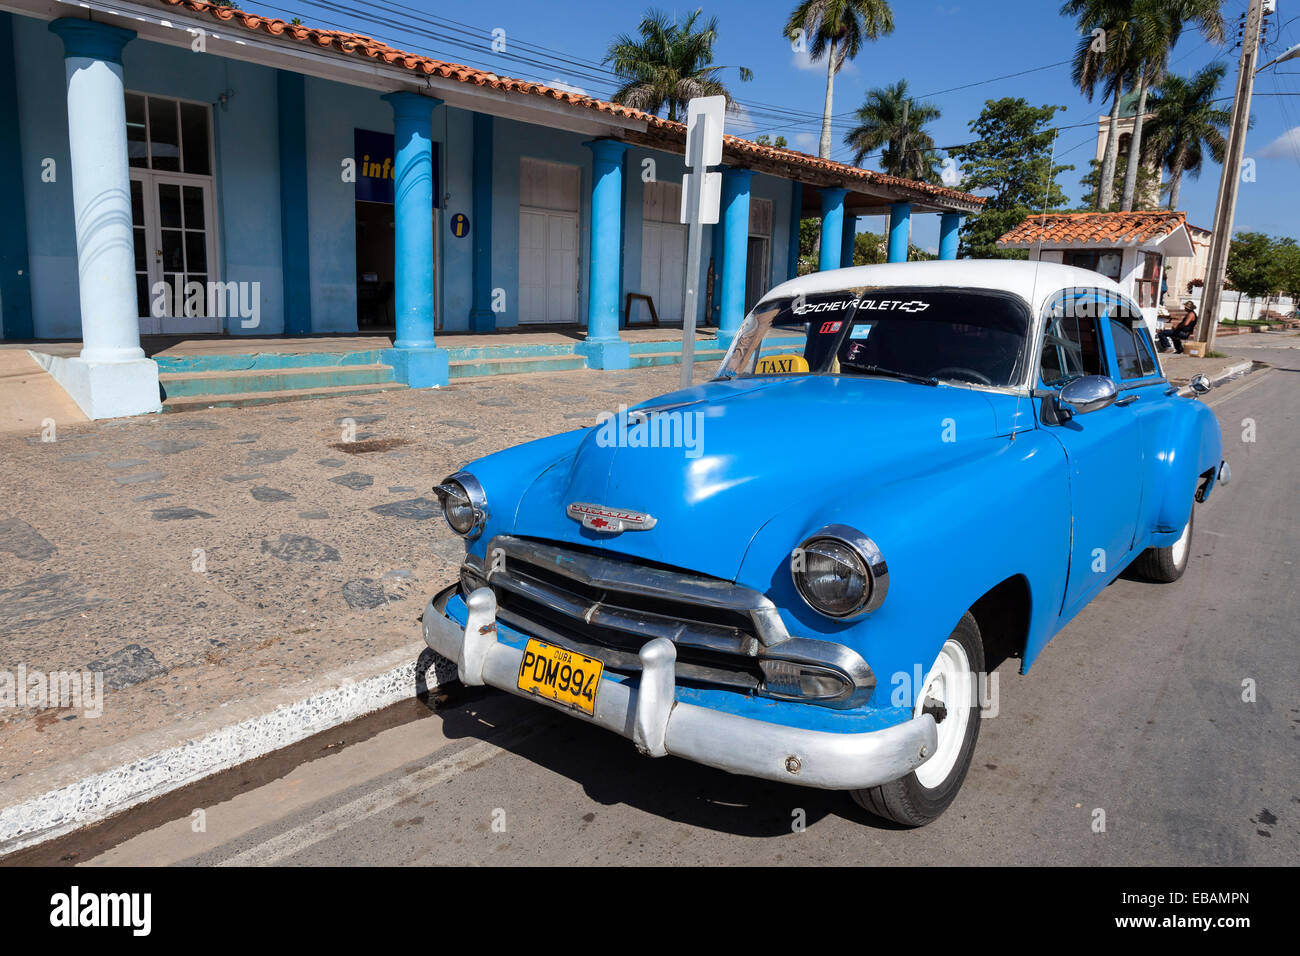 Vintage Chevrolet from the 1940s, Viñales, Cuba Stock Photo